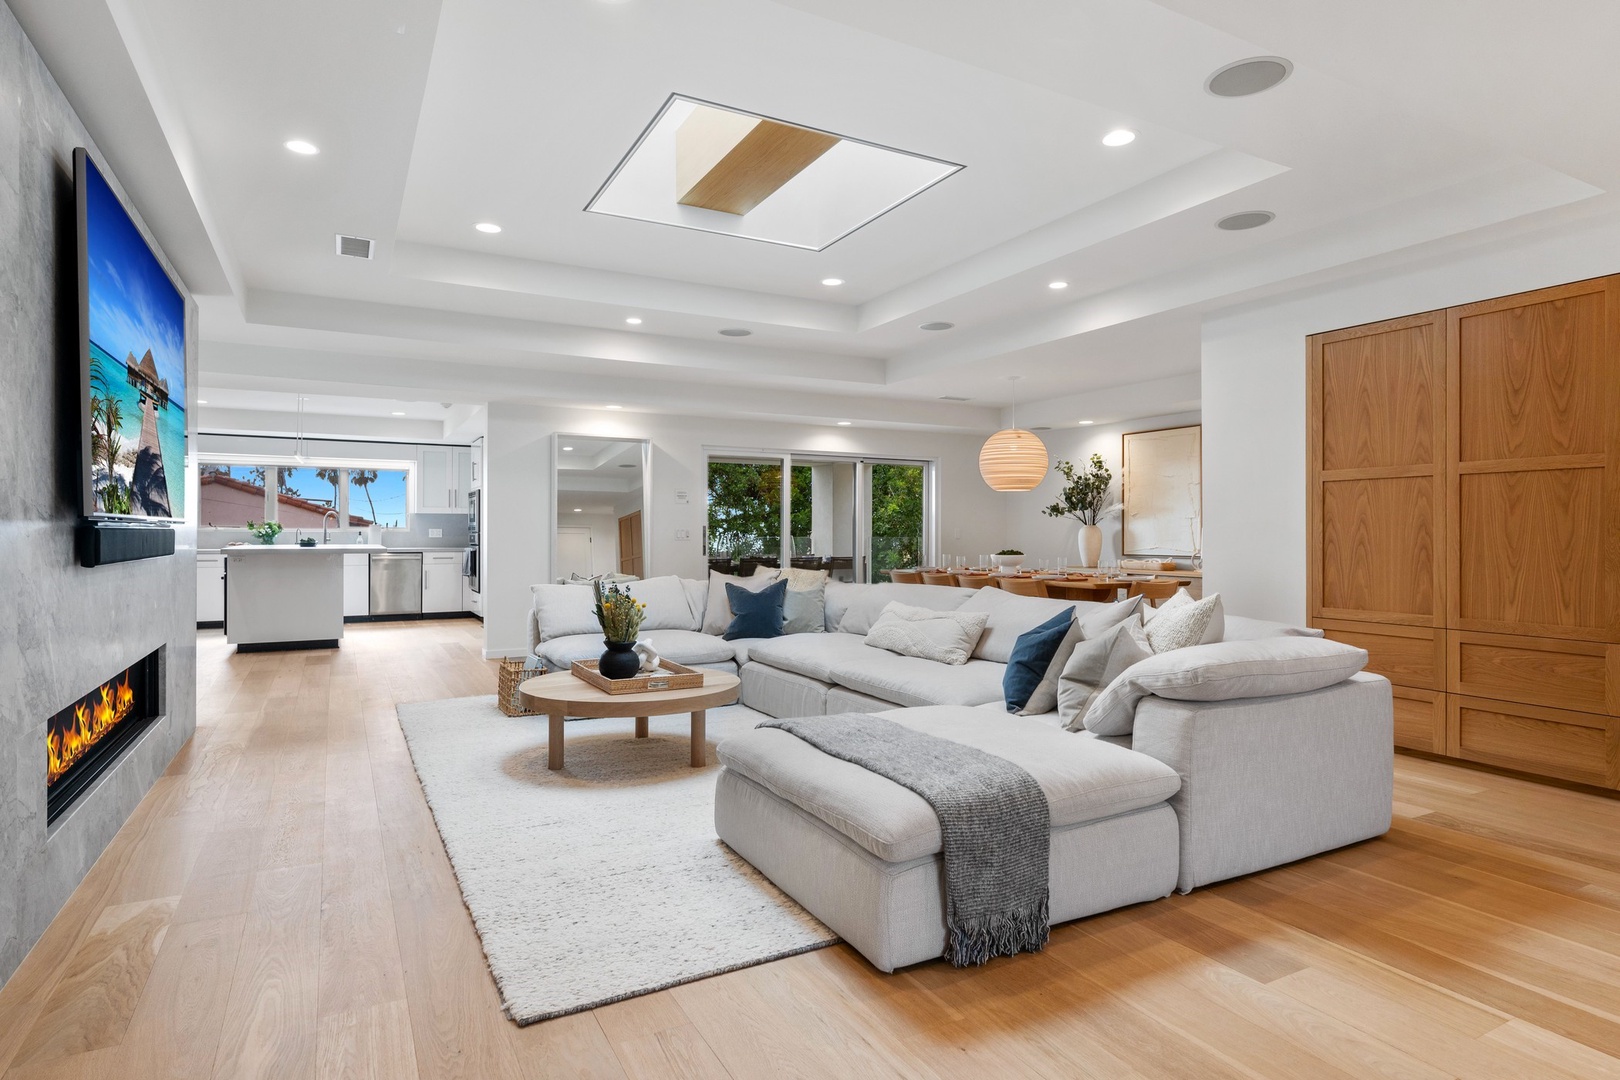 Light-filled and elegant living area